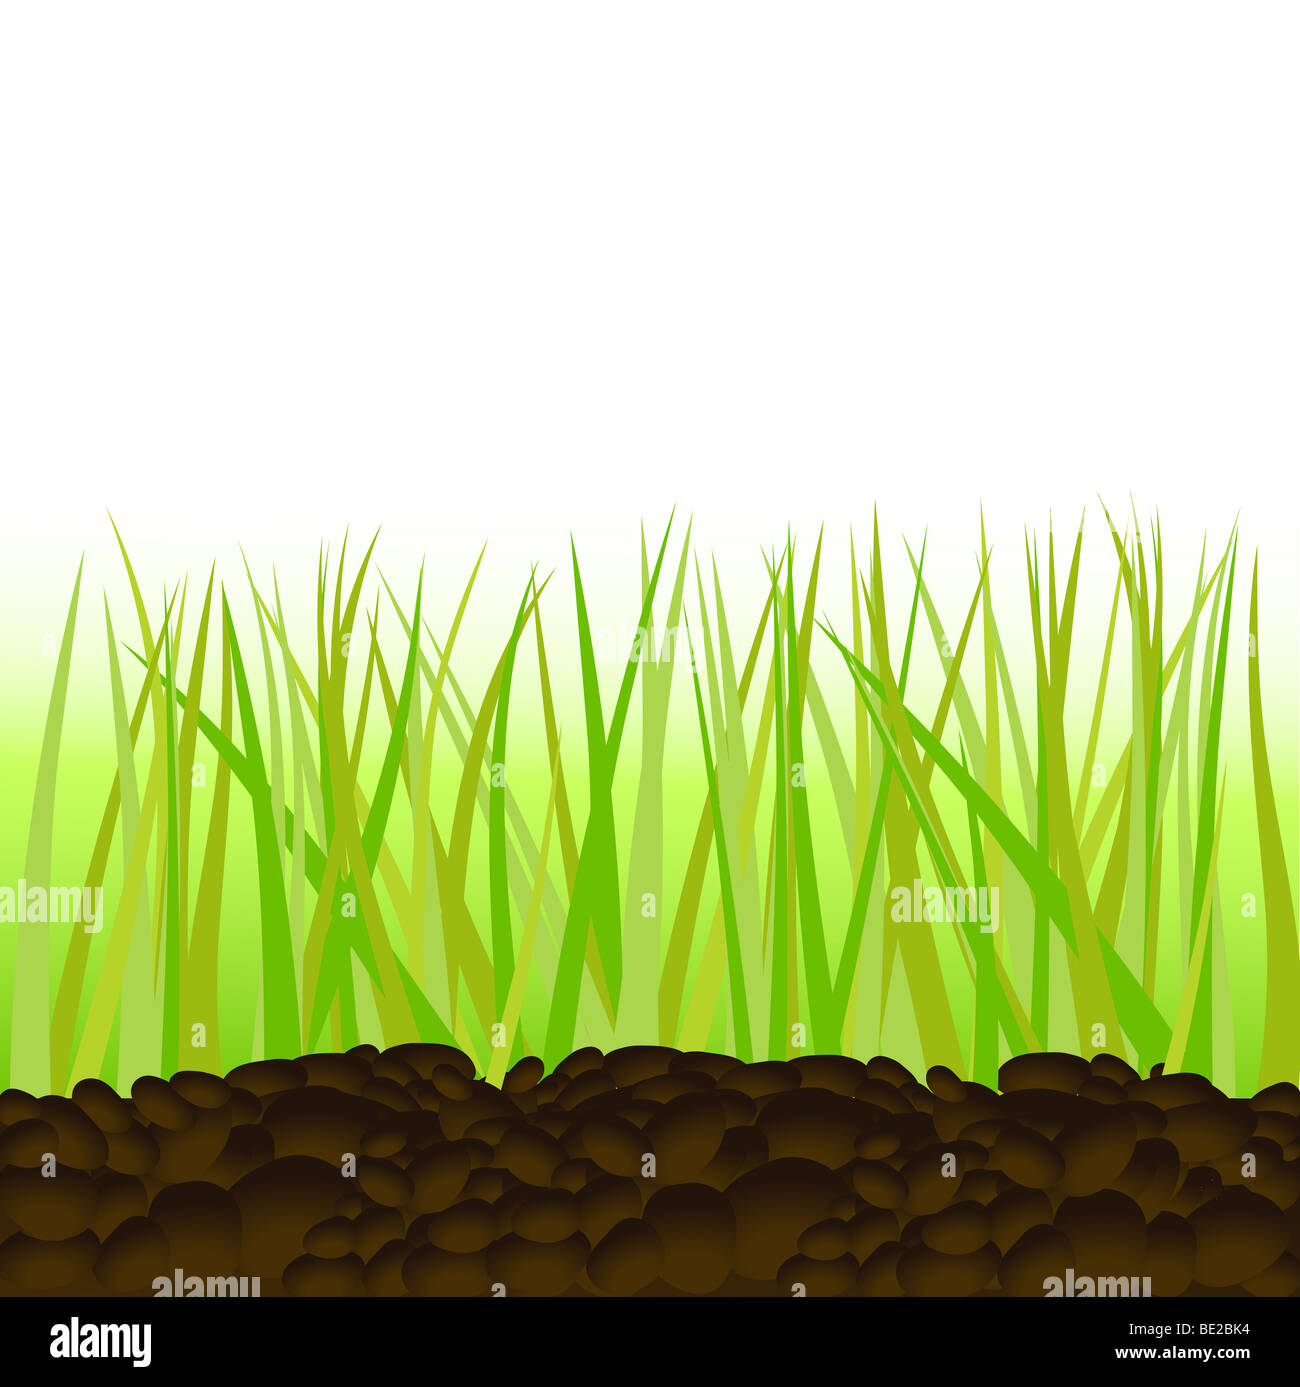 Green grass vector illustration. Banque D'Images